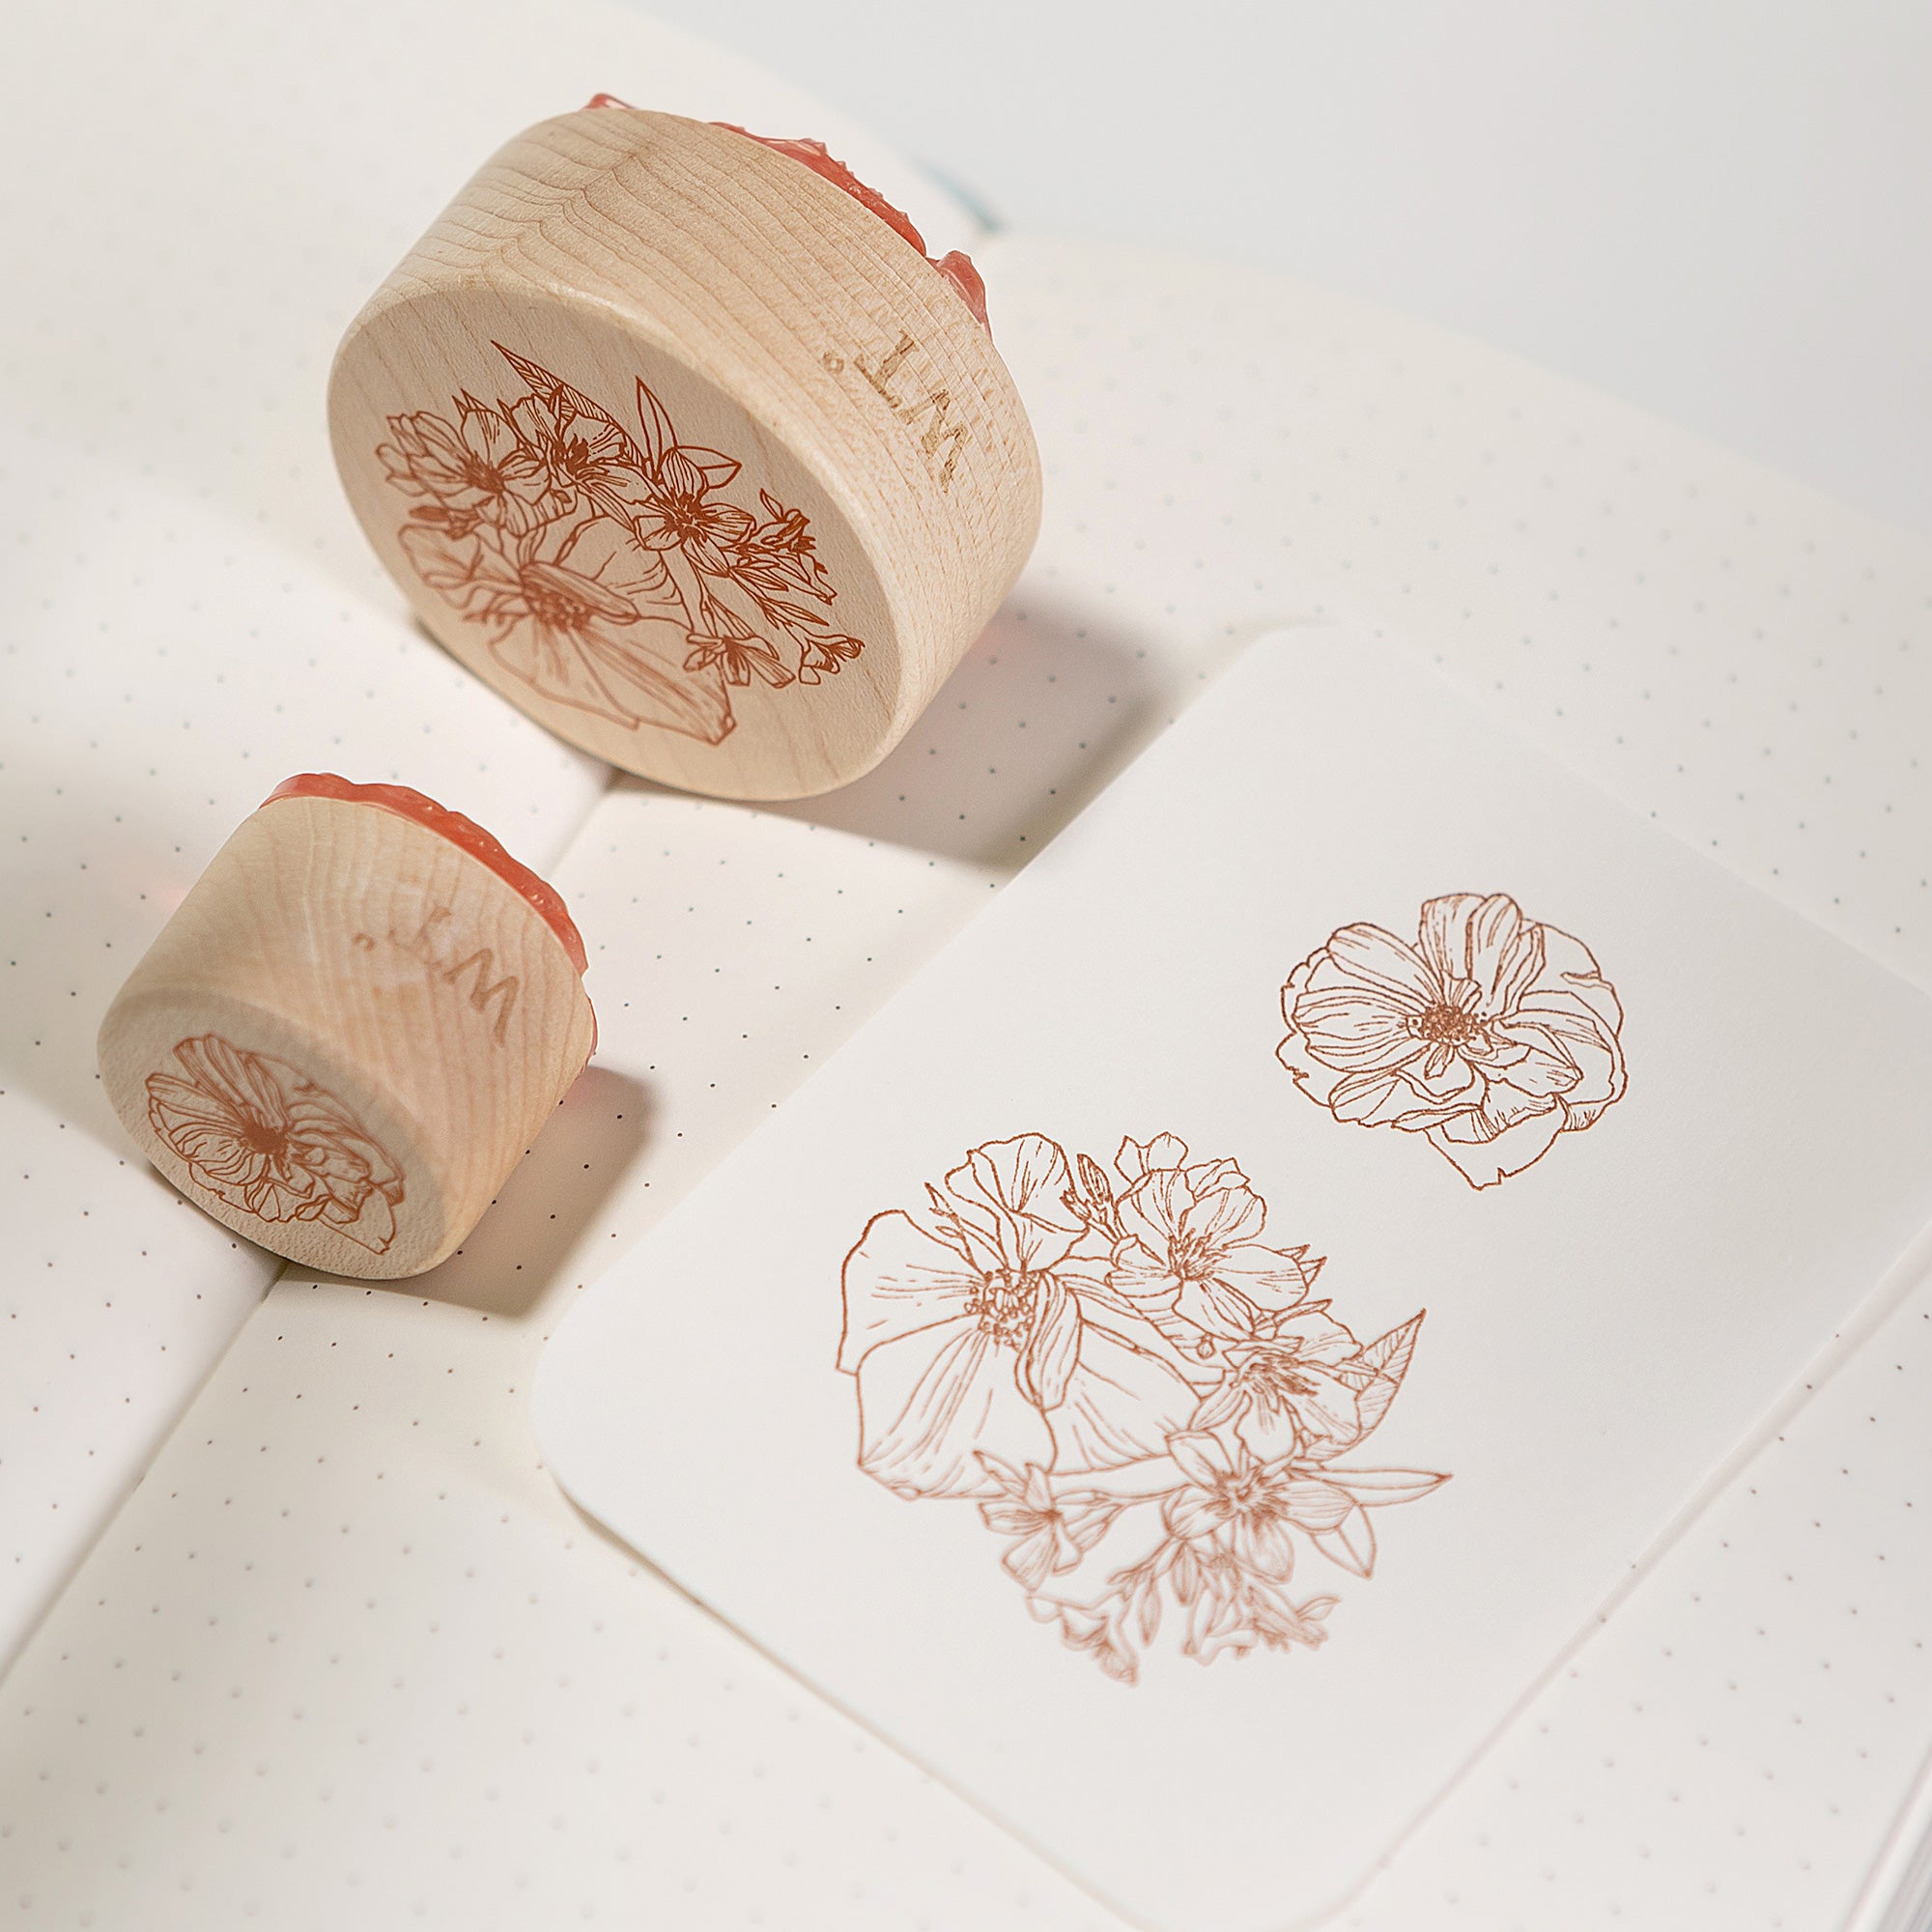 Valley of Flower Stamp Set